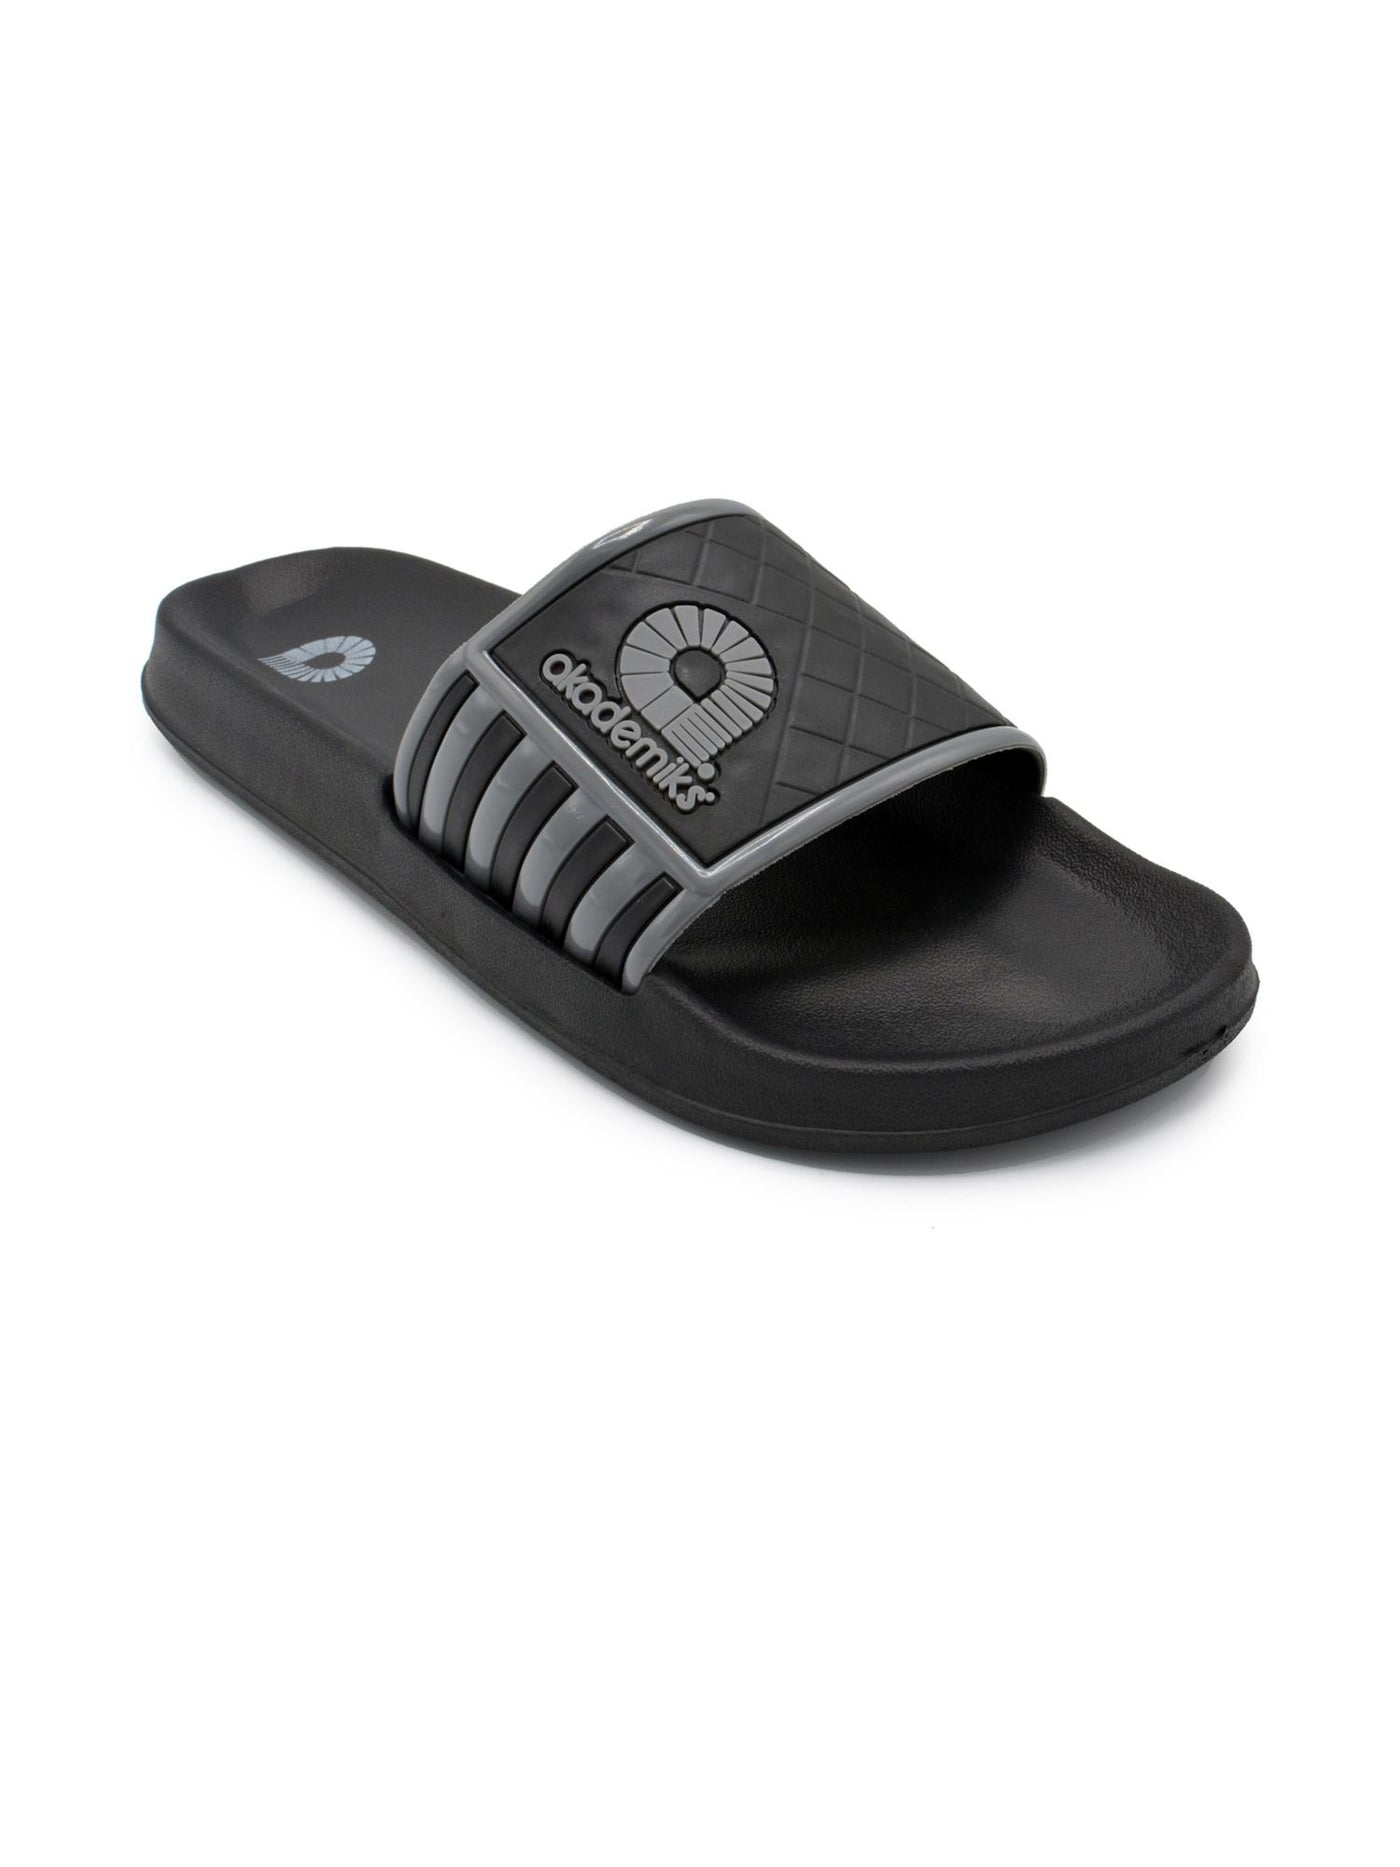 AKADEMIKS Mens Black Mixed Media Waterproof Side Stripe Open Toe Slip On Slide Sandals Shoes 46